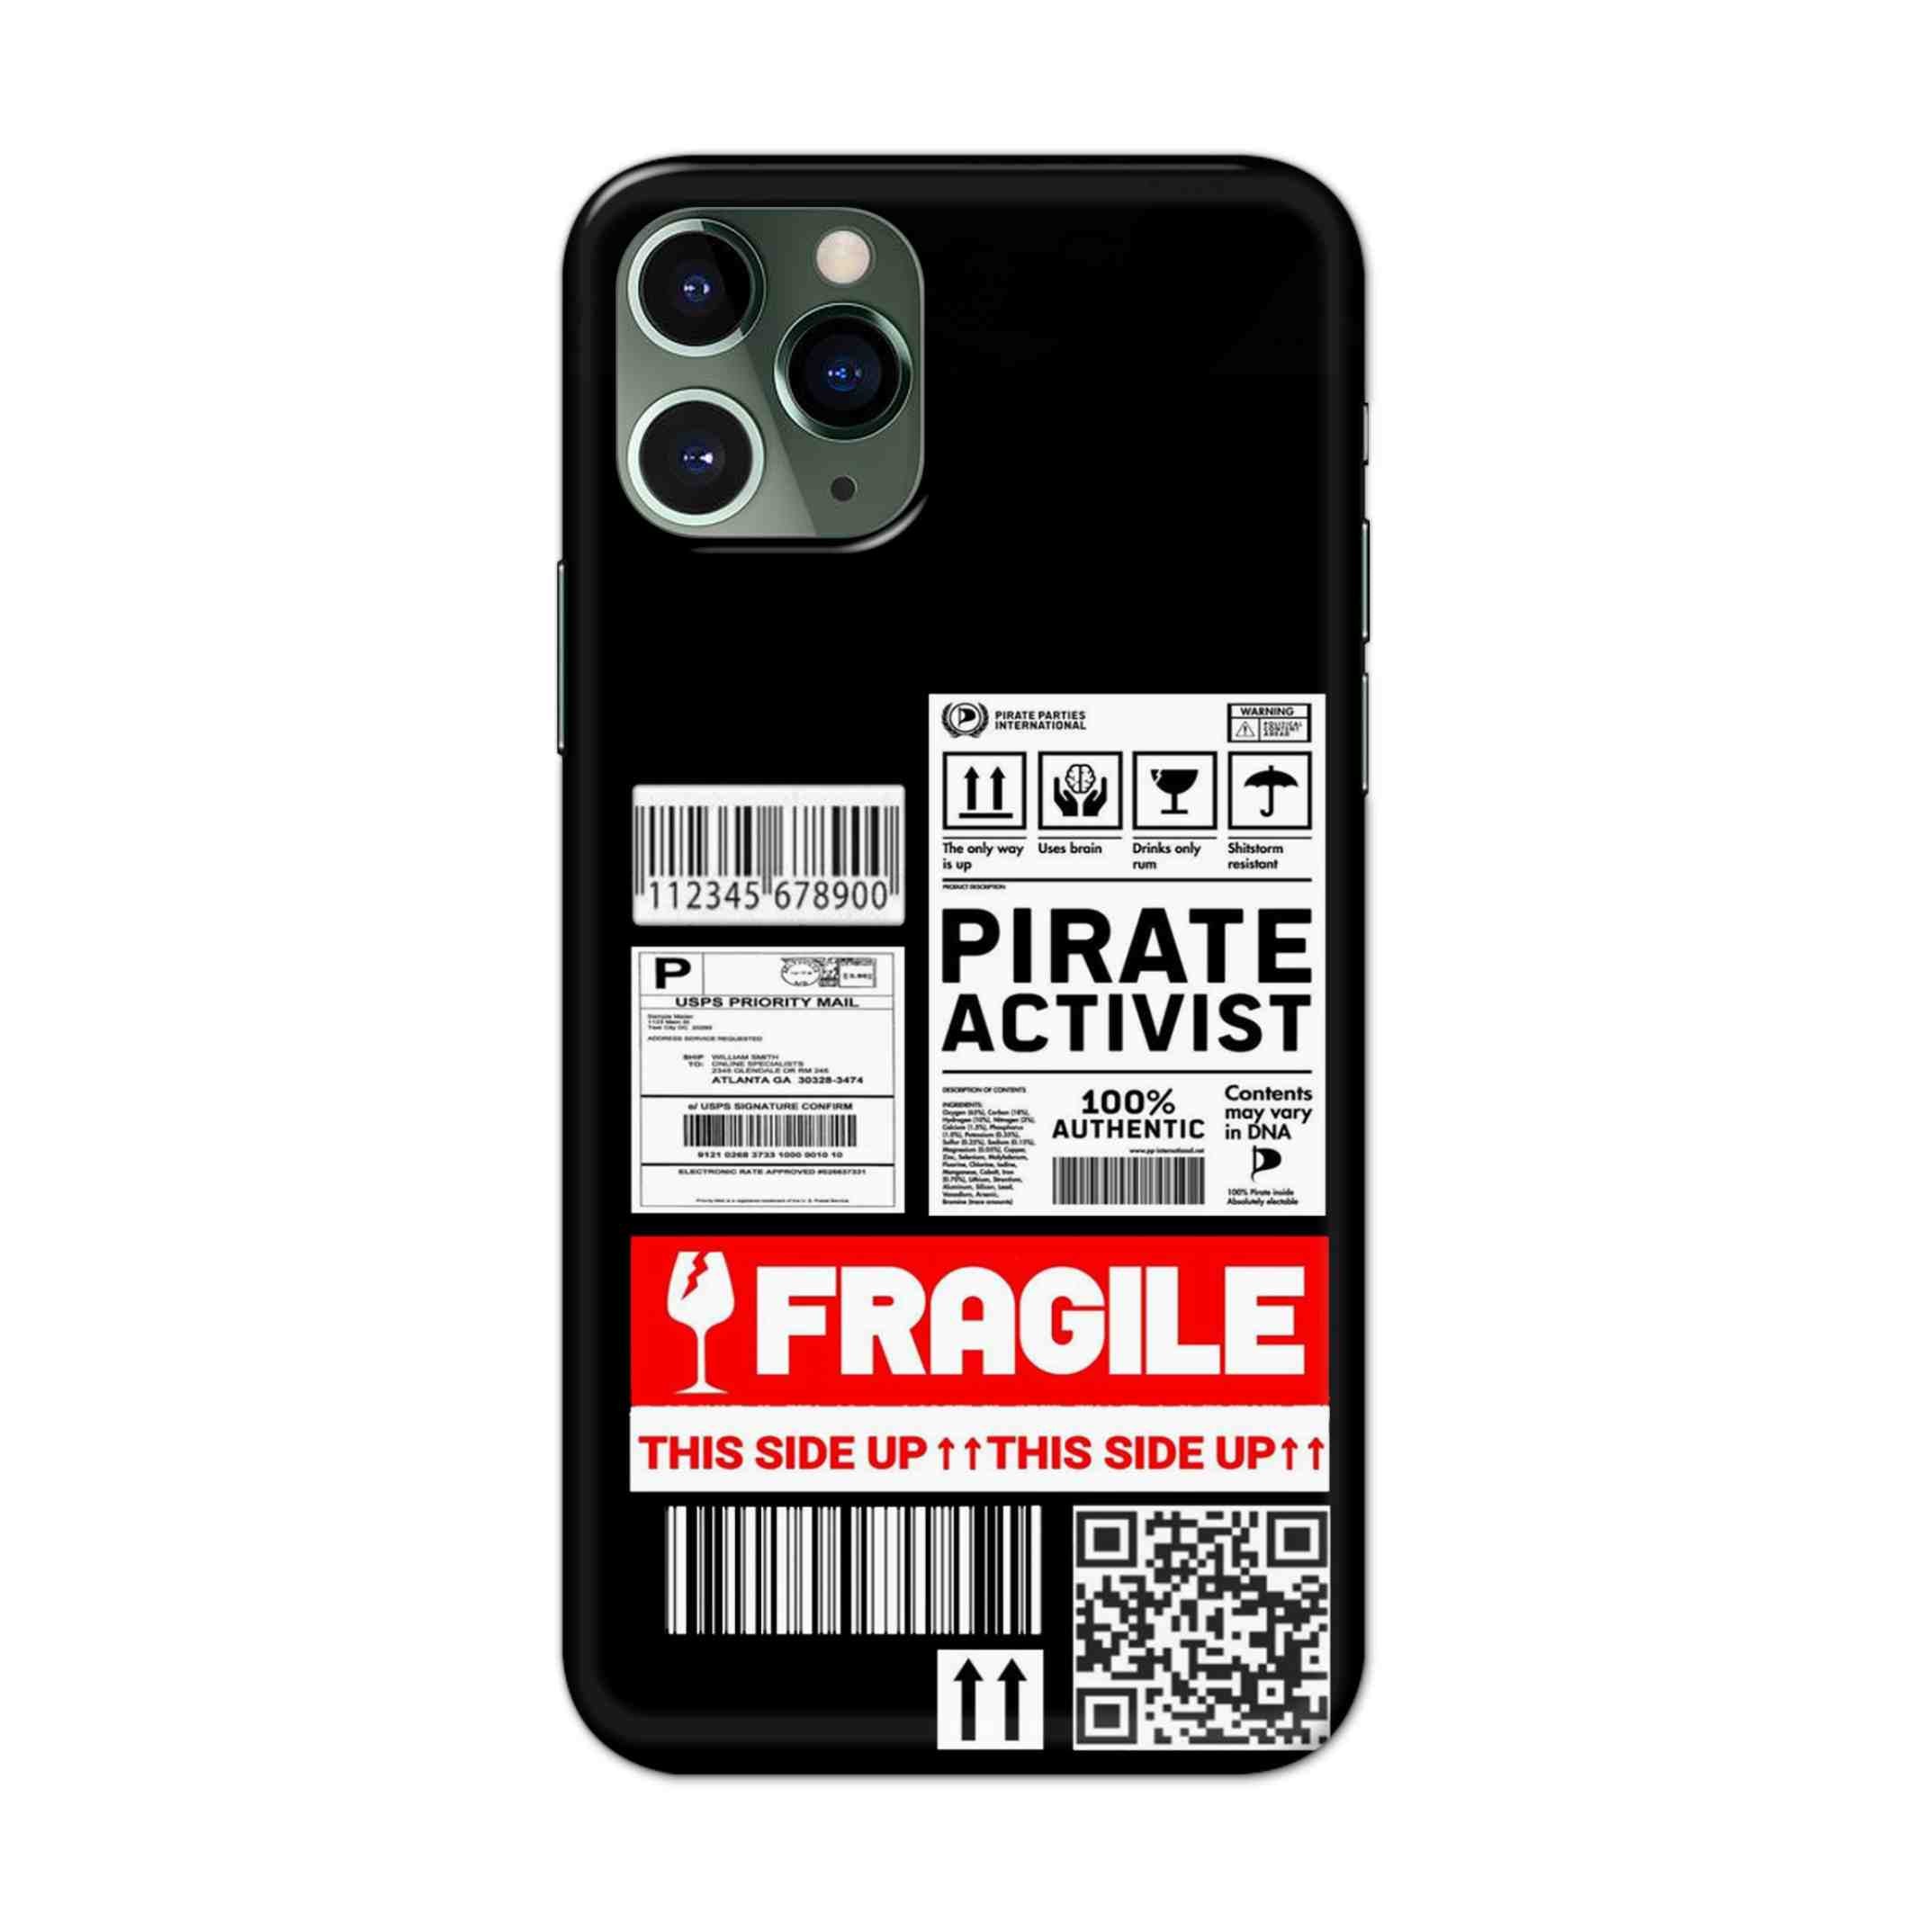 Buy Fragile Hard Back Mobile Phone Case/Cover For iPhone 11 Pro Online